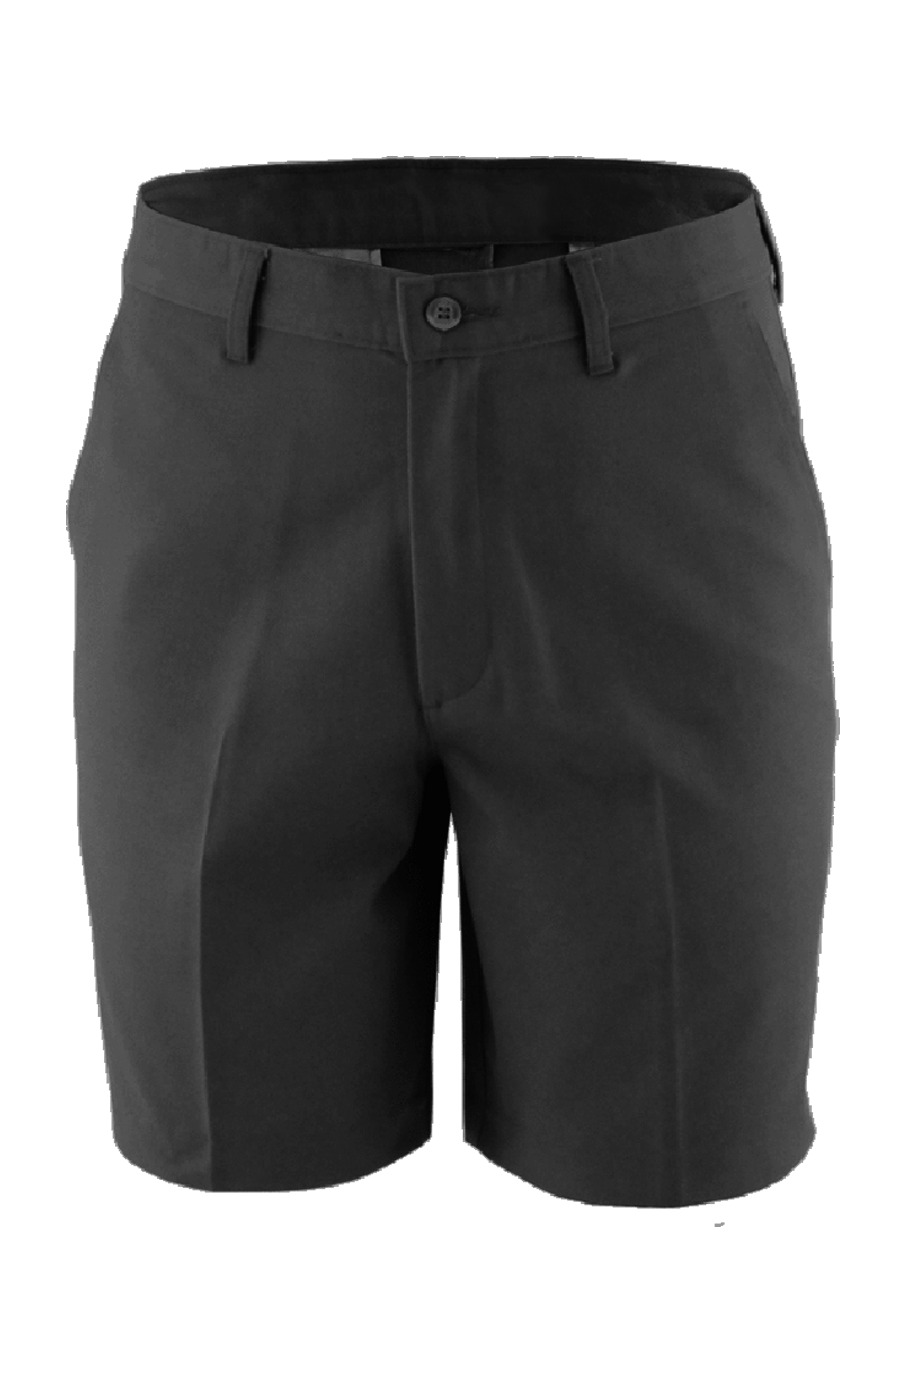 Edwards Garment 2450 - Men's Flat Front Short